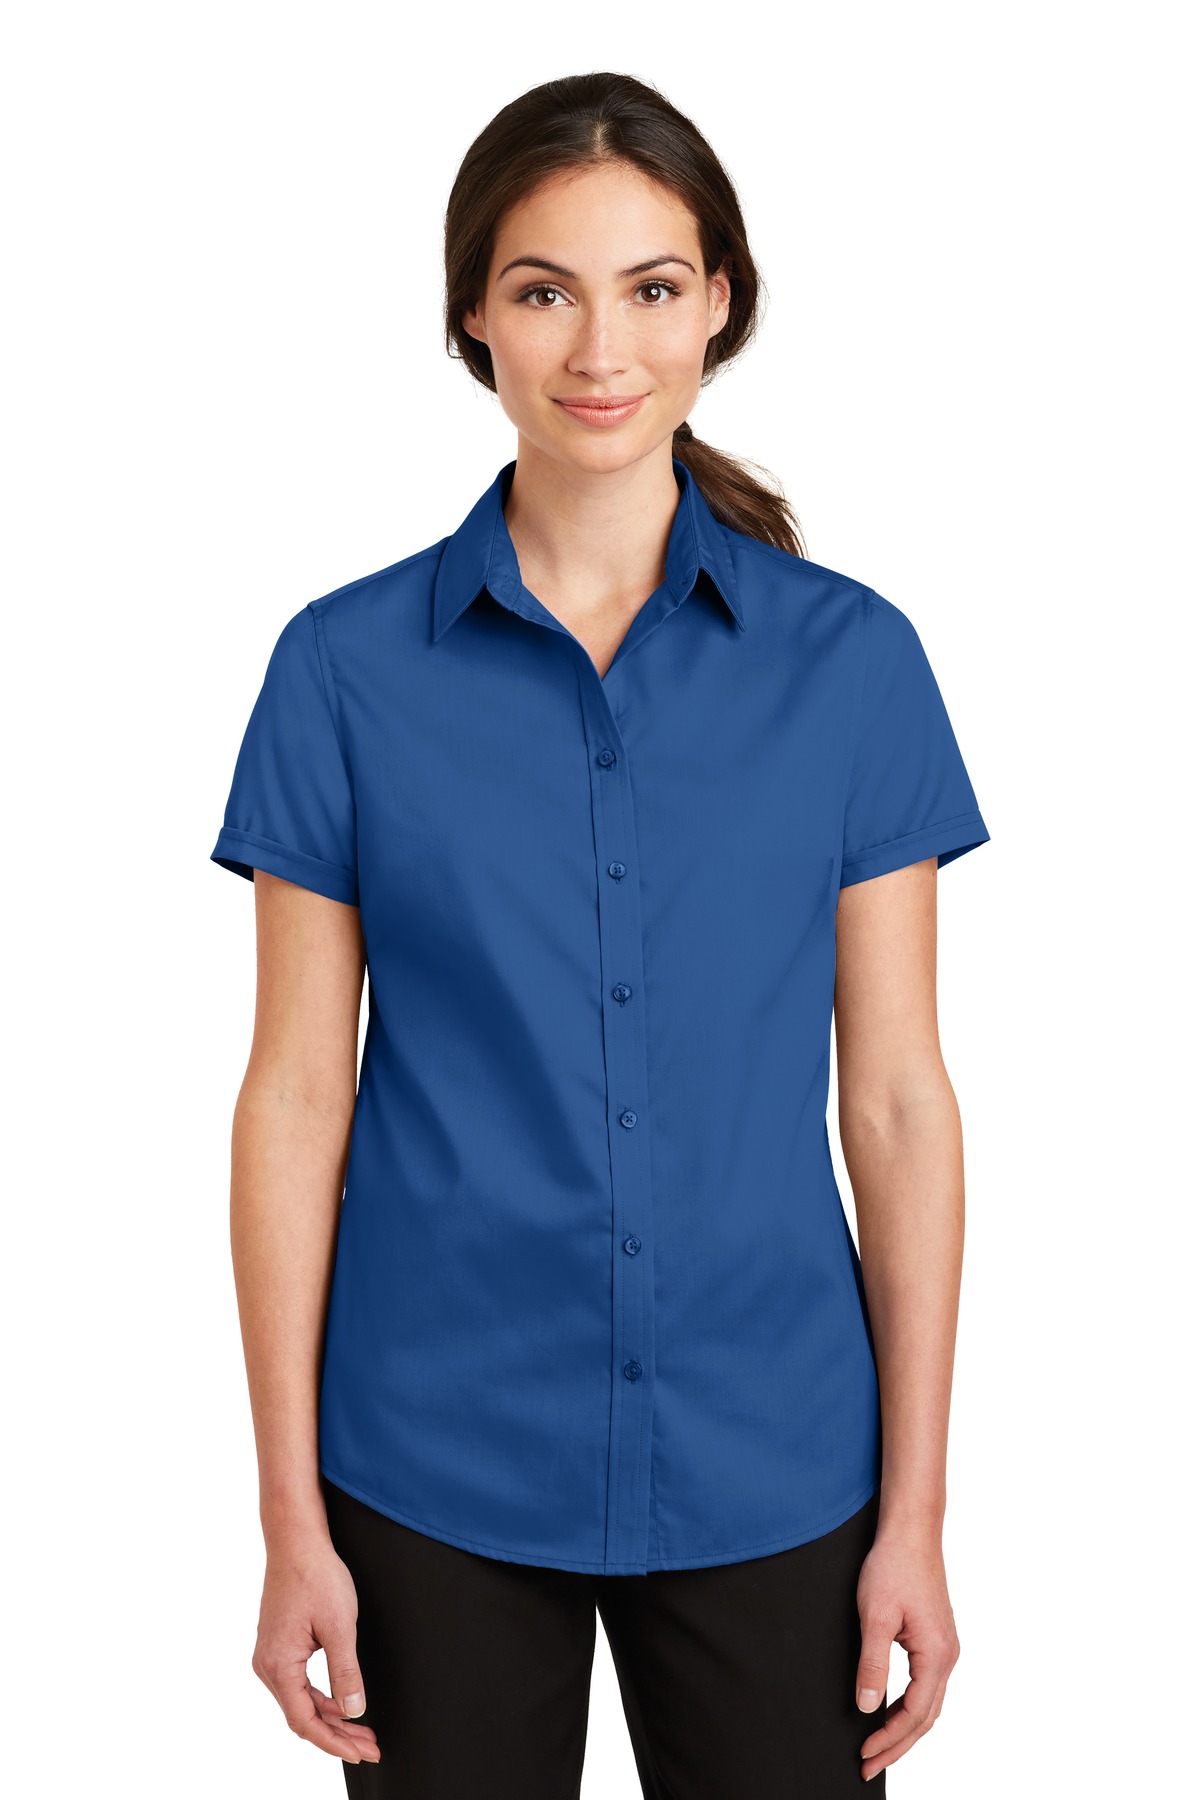 Port Authority Ladies Short Sleeve SuperPro Twill Shirt-M (True Blue) - image 1 of 6